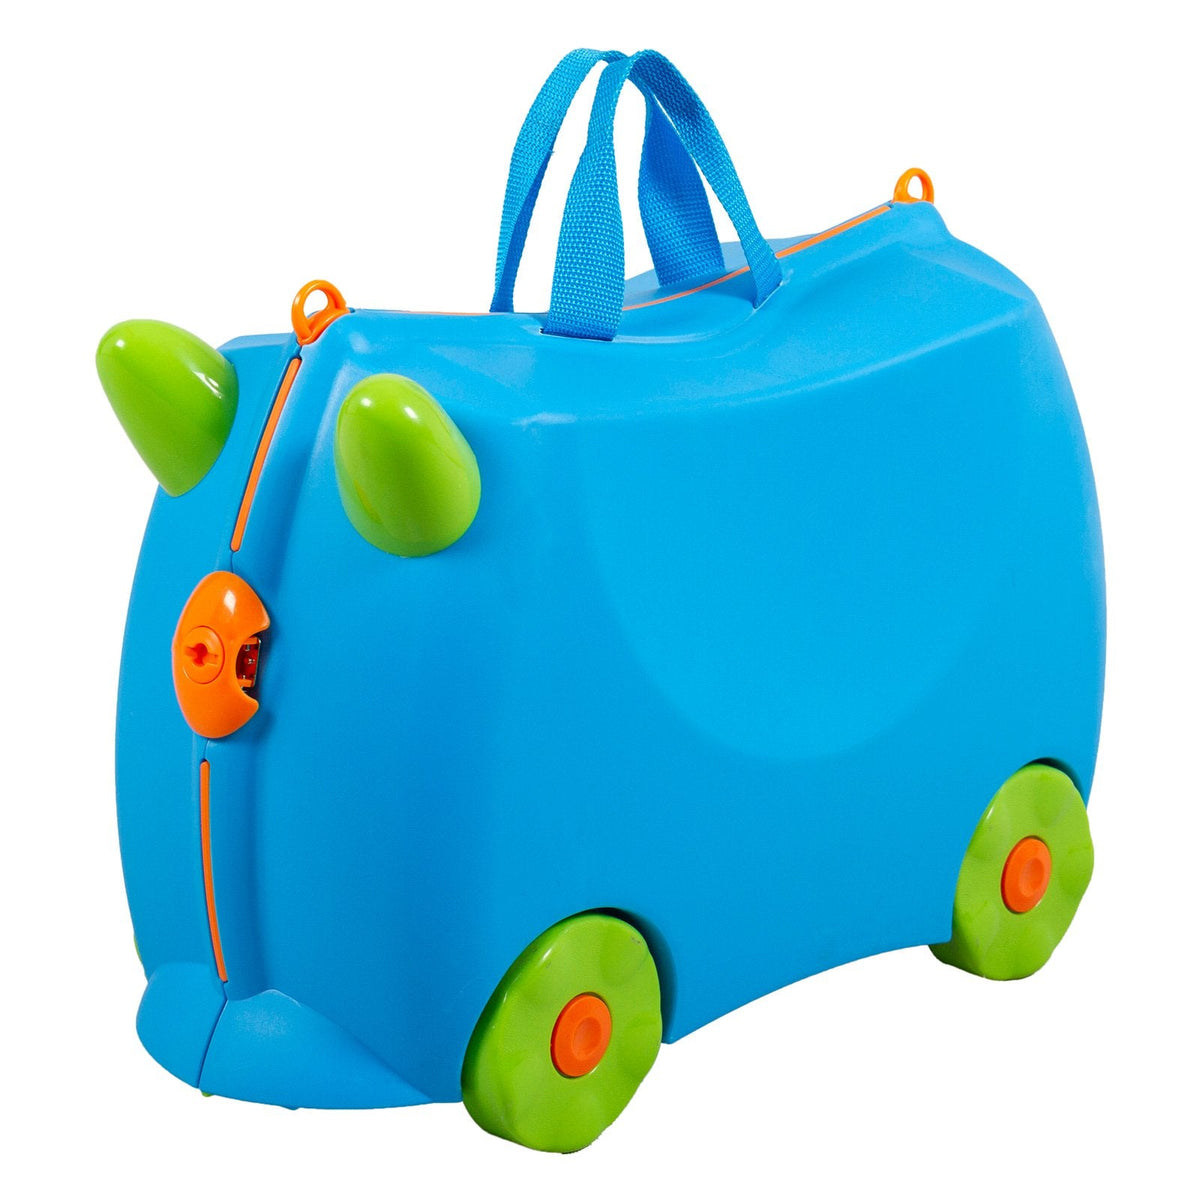 Kiddicare Bon Voyage Kids Ride On Suitcase Luggage - Travel Made Fun in Blue